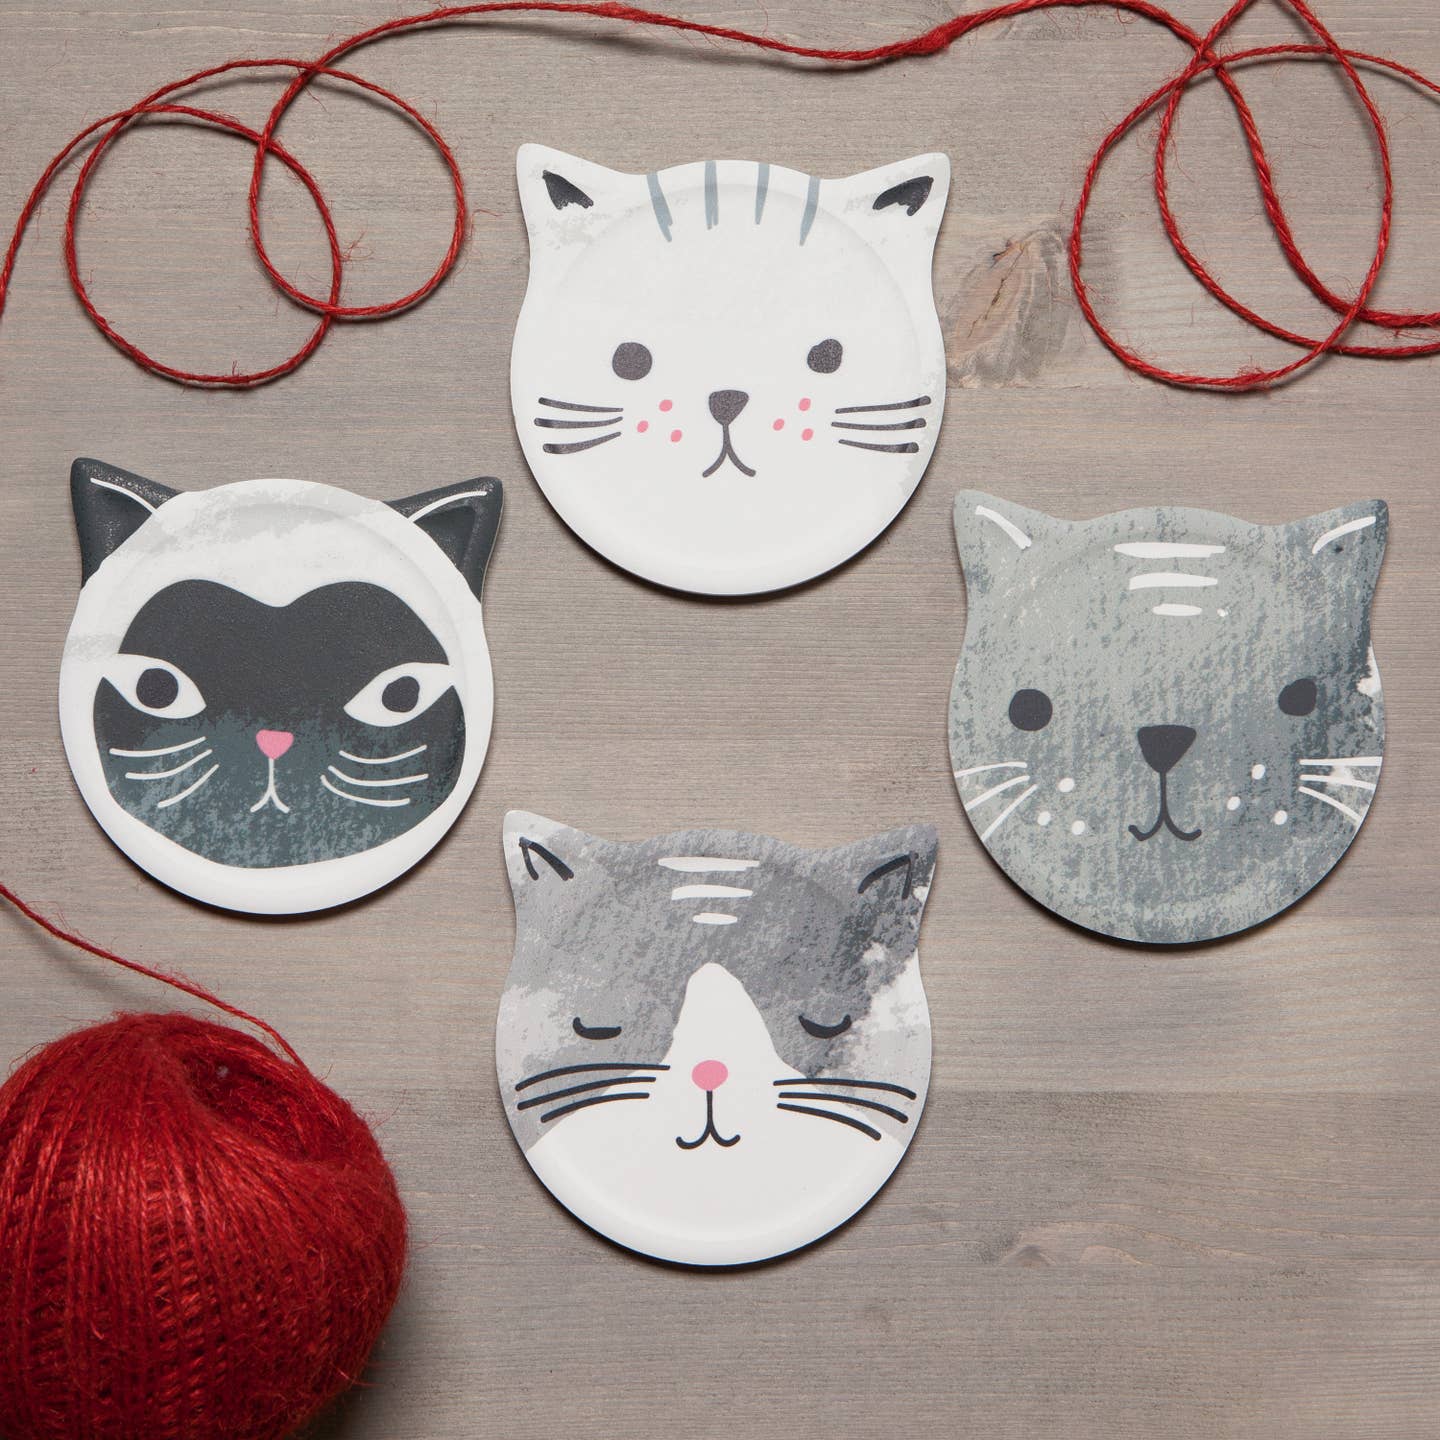 Cats Meow Soak Up Coasters - Set of 4